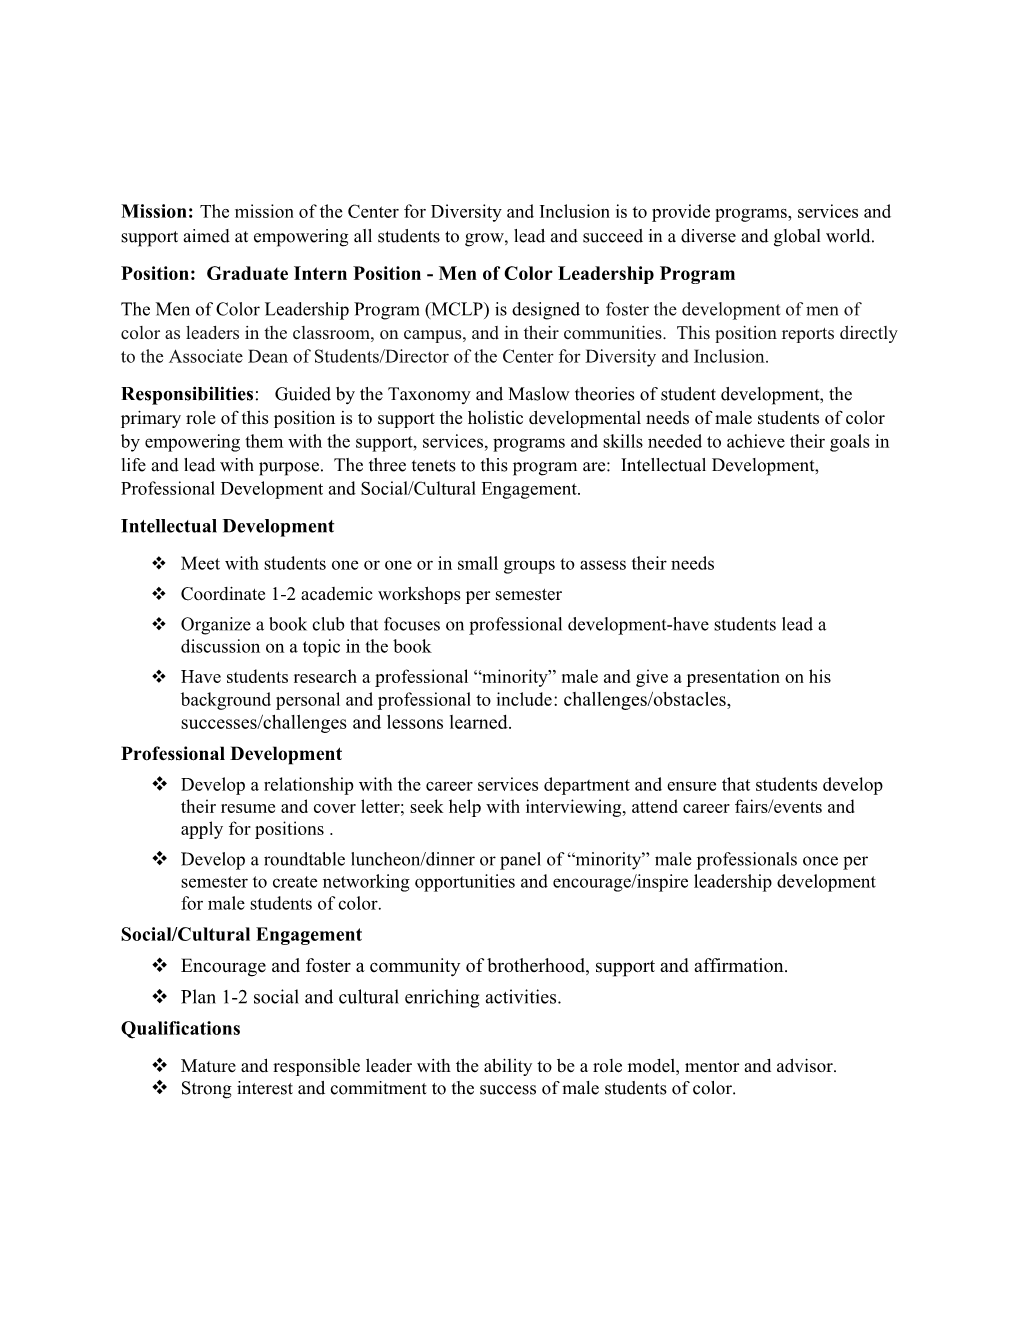 Position: Graduate Intern Position - Men of Color Leadership Program